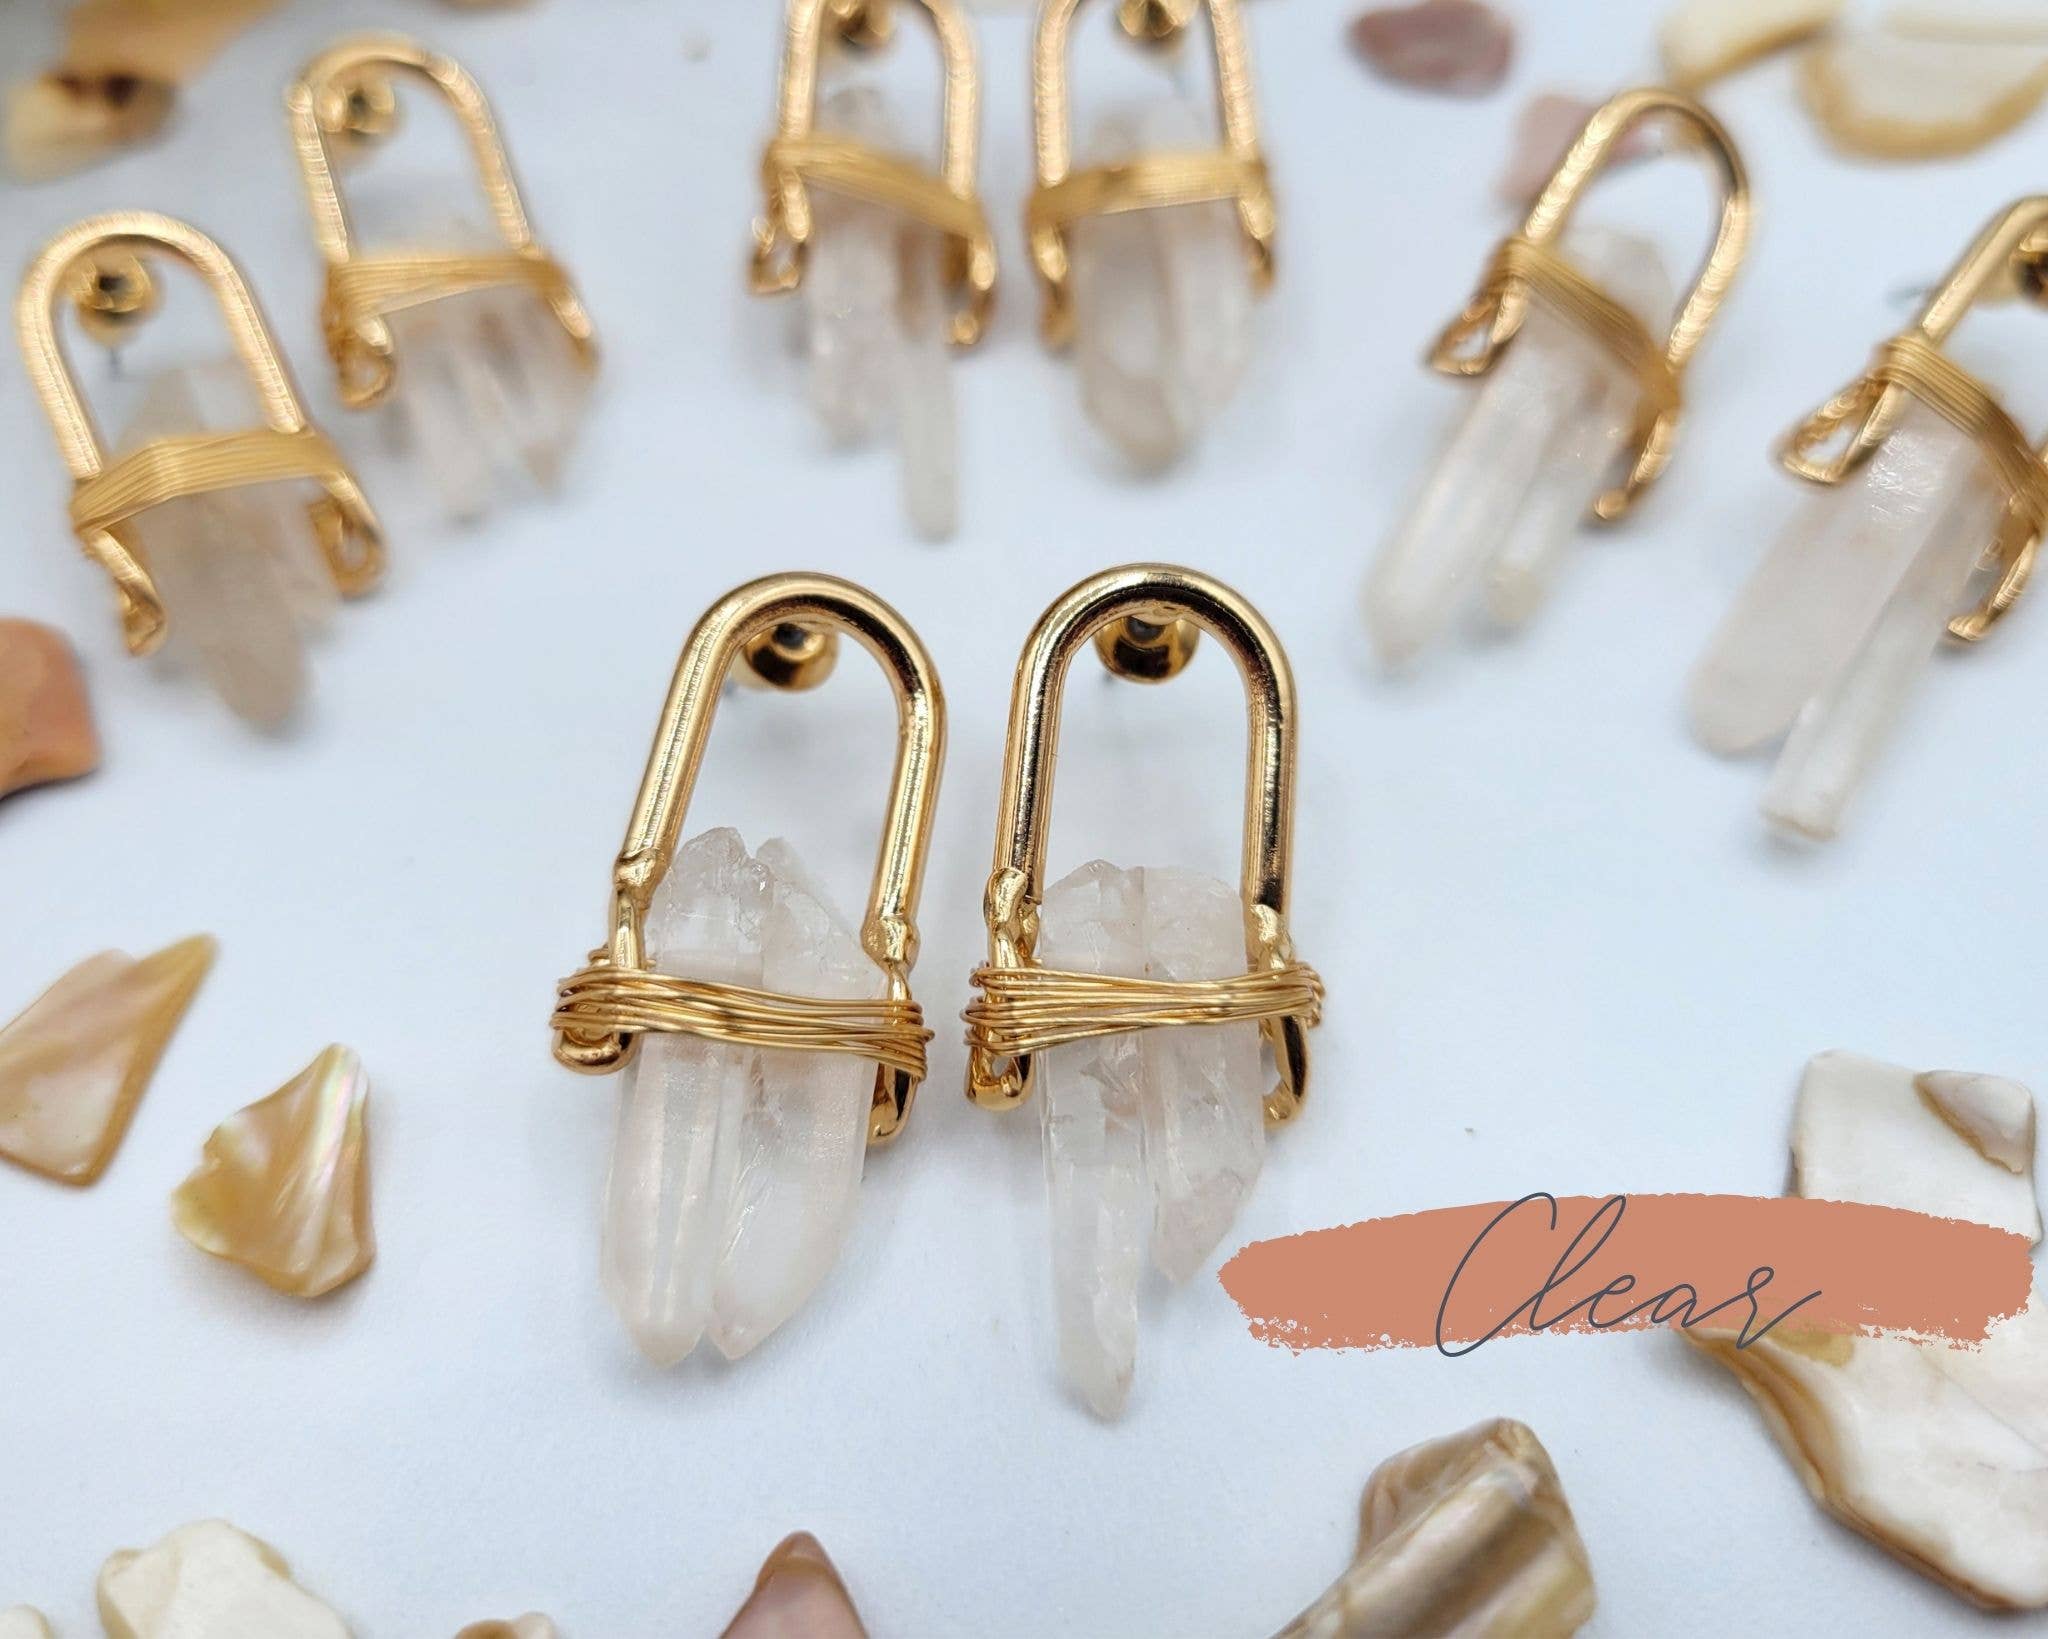 Gemstone Stud Earrings Gold Accents with Clear Quartz - Pretty Crafty Lady Shop